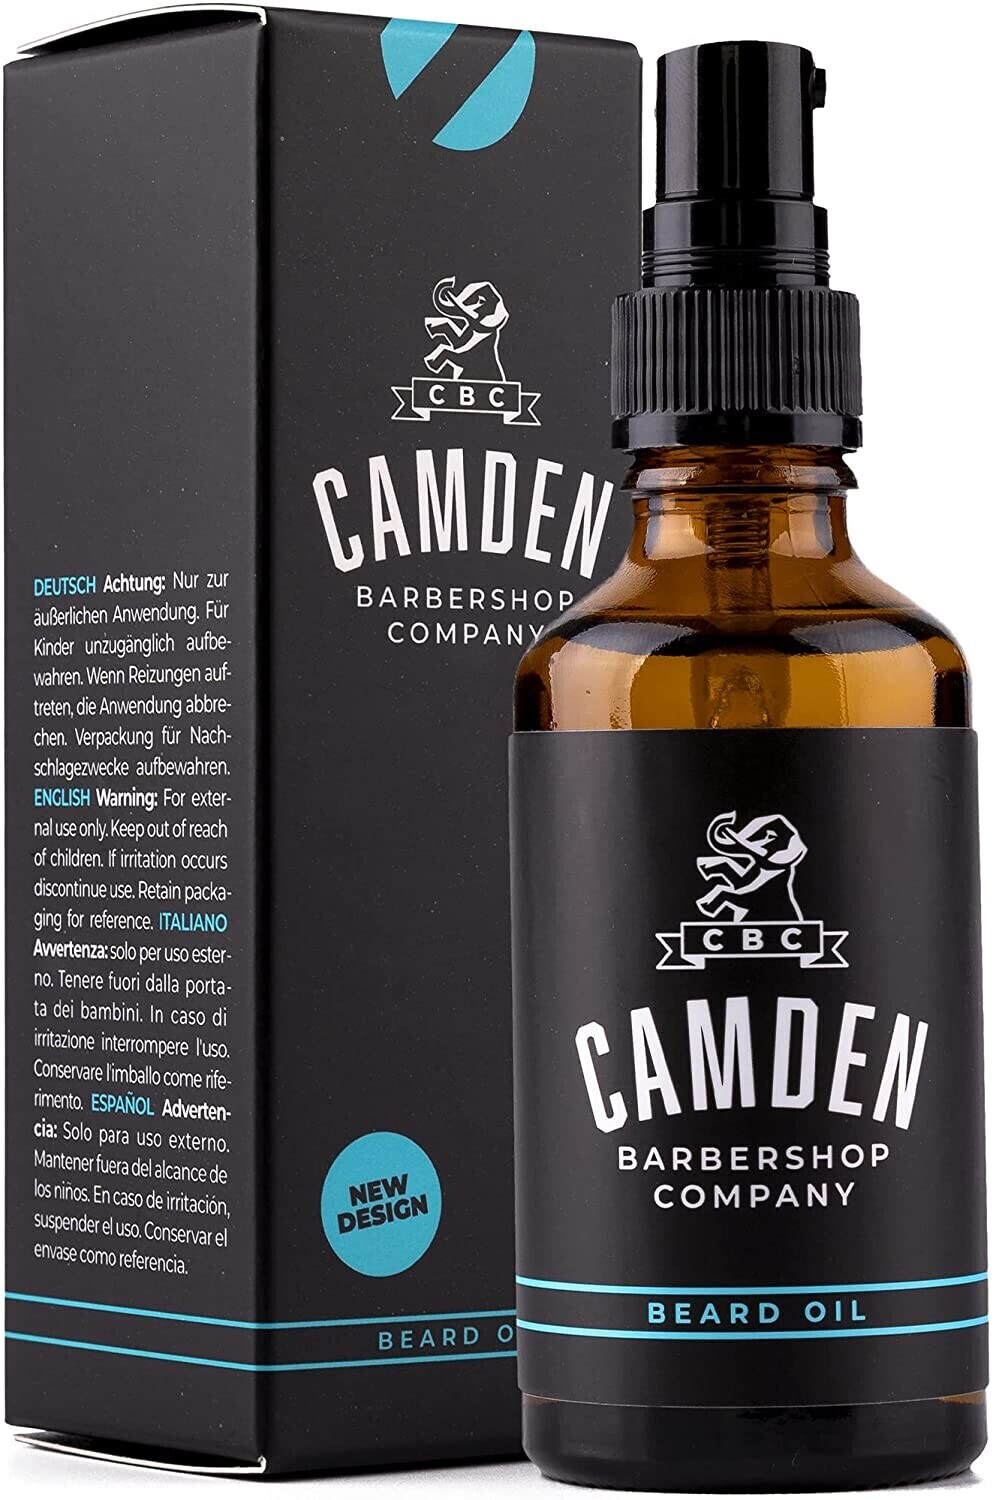 Camden Barbershop Company Original 9,99 Preisvergleich (50ml) Oil ab | Beard € bei